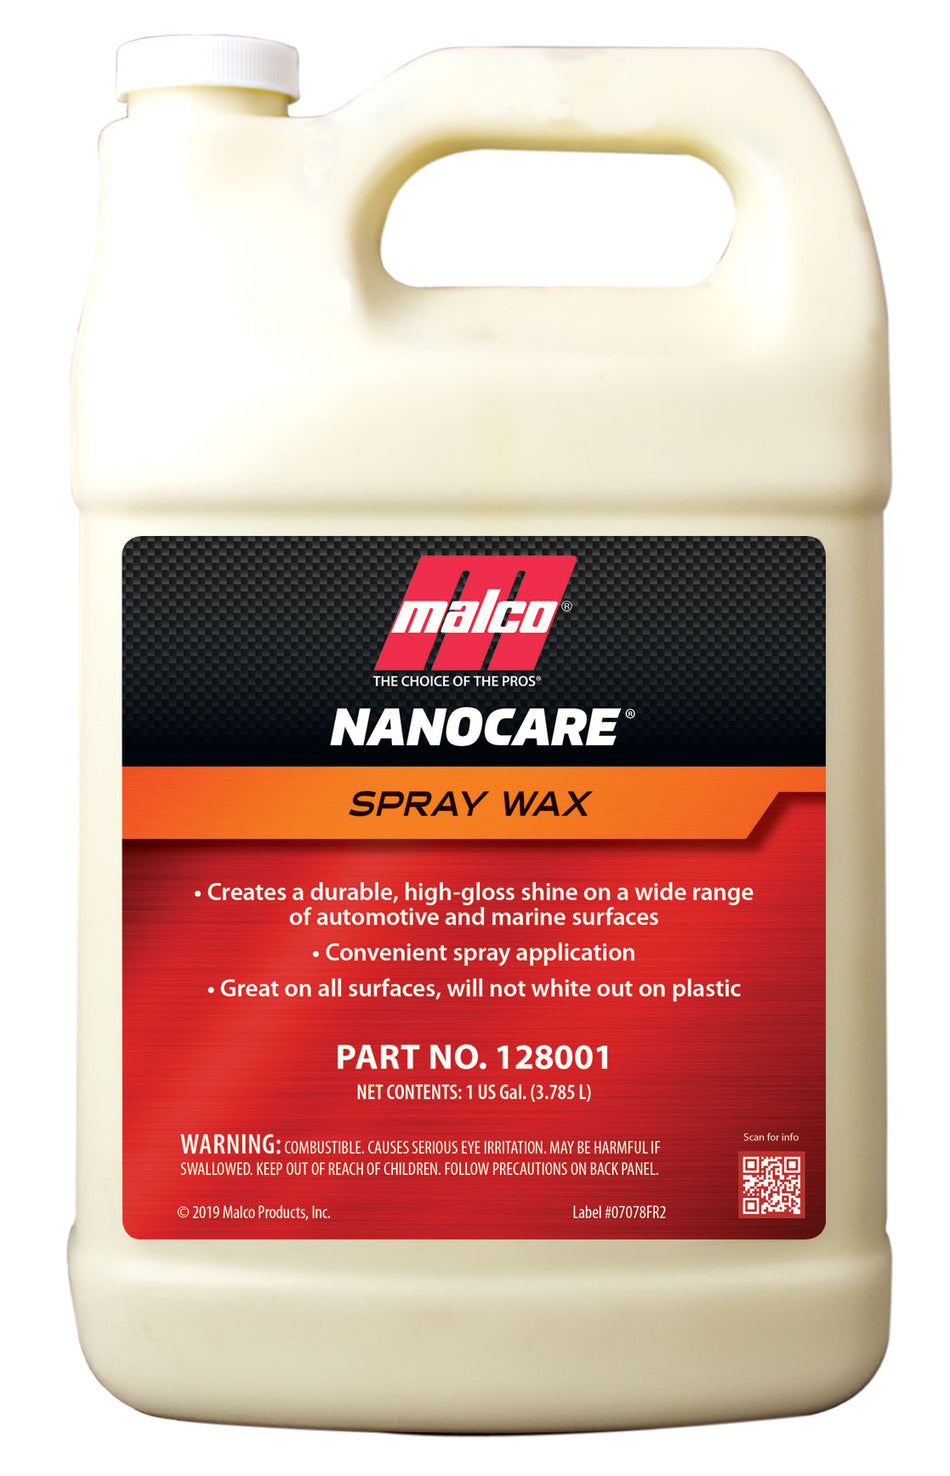 Malco NanoCare Spray Wax